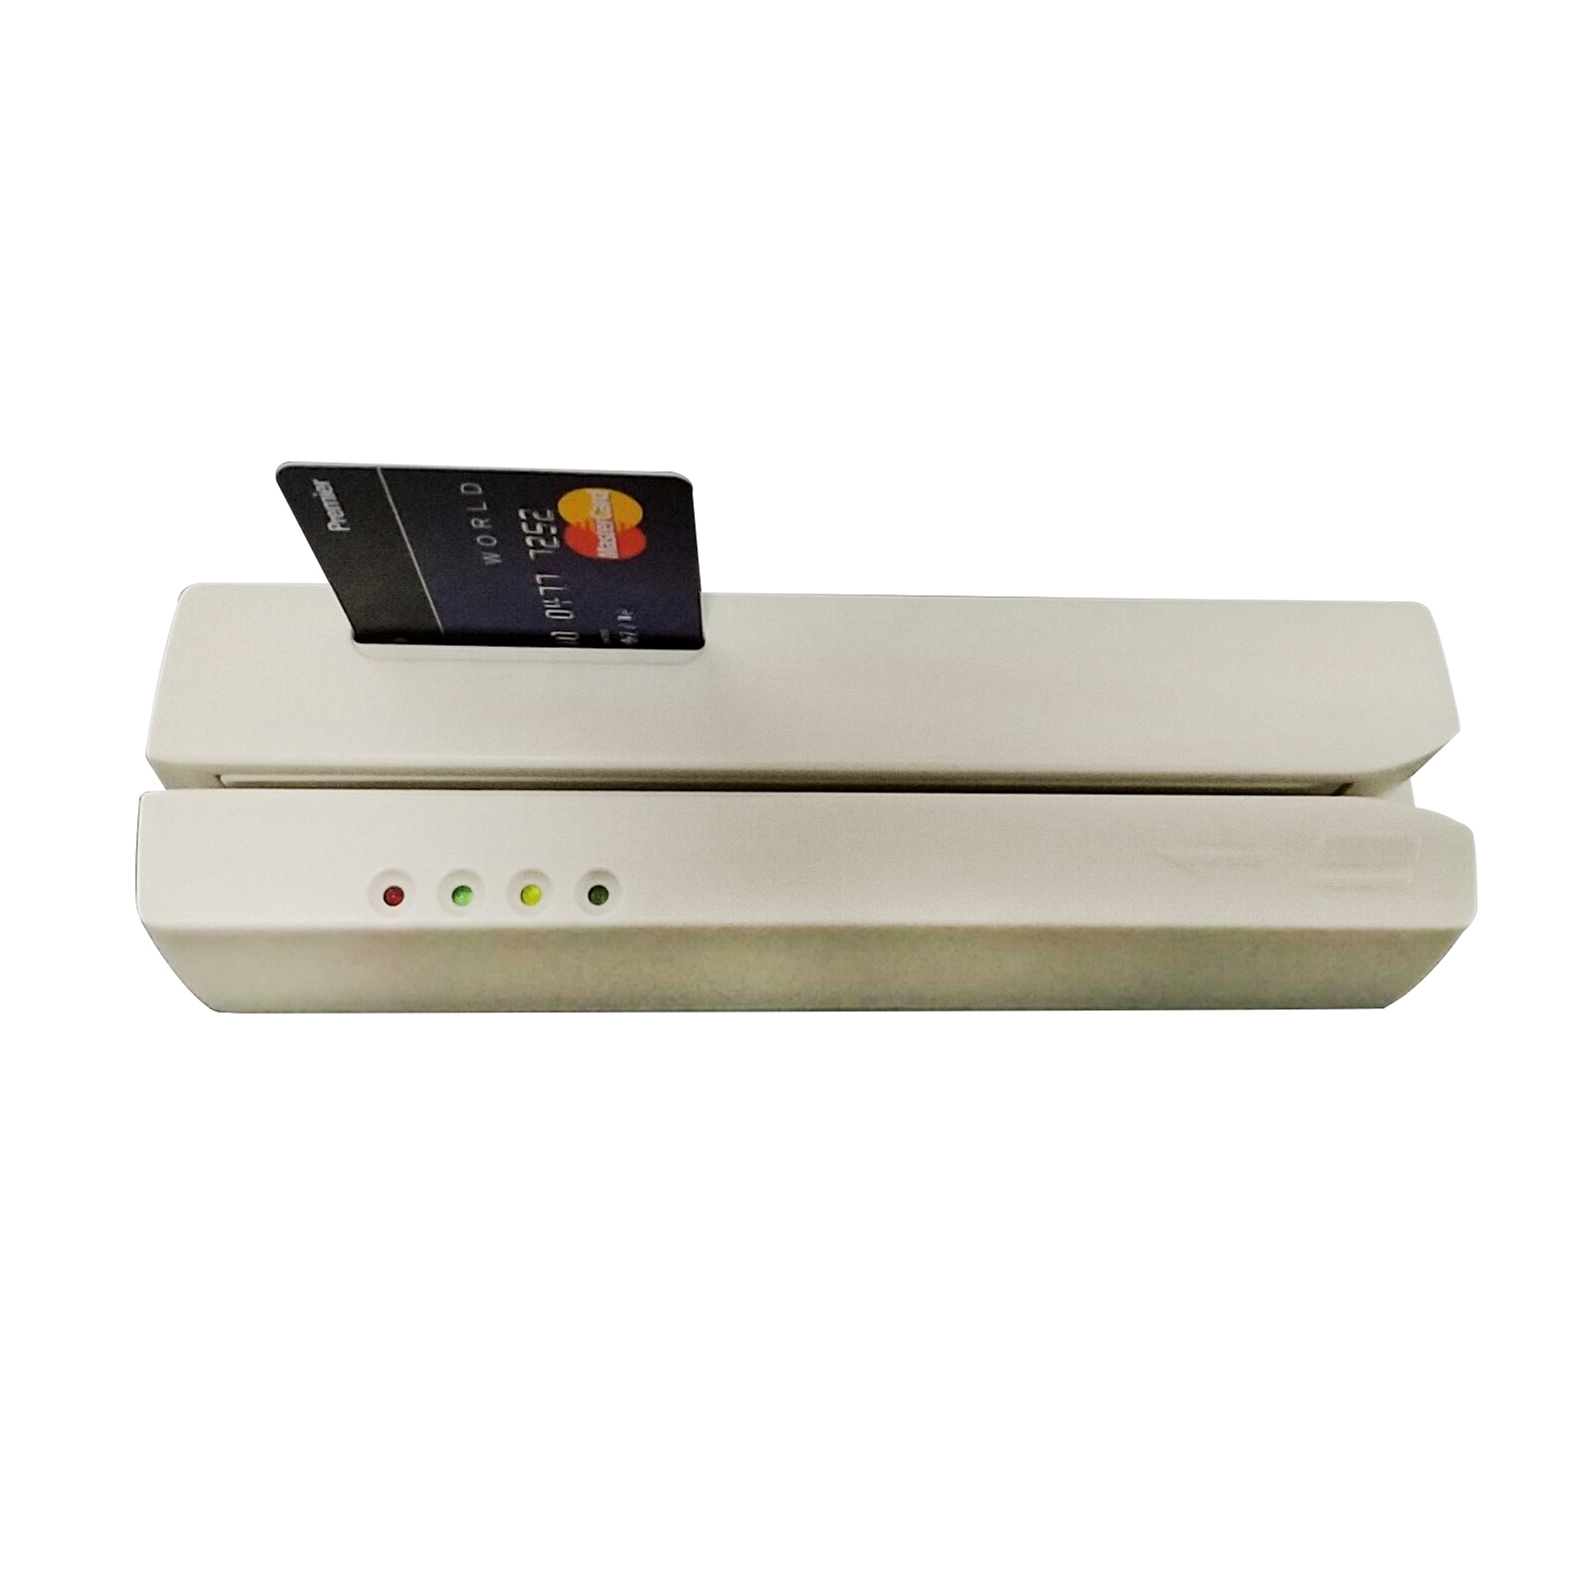 (MSR2600) Tarjeta de banda magnética portátil, lector de tarjetas de chip y escritor MSR